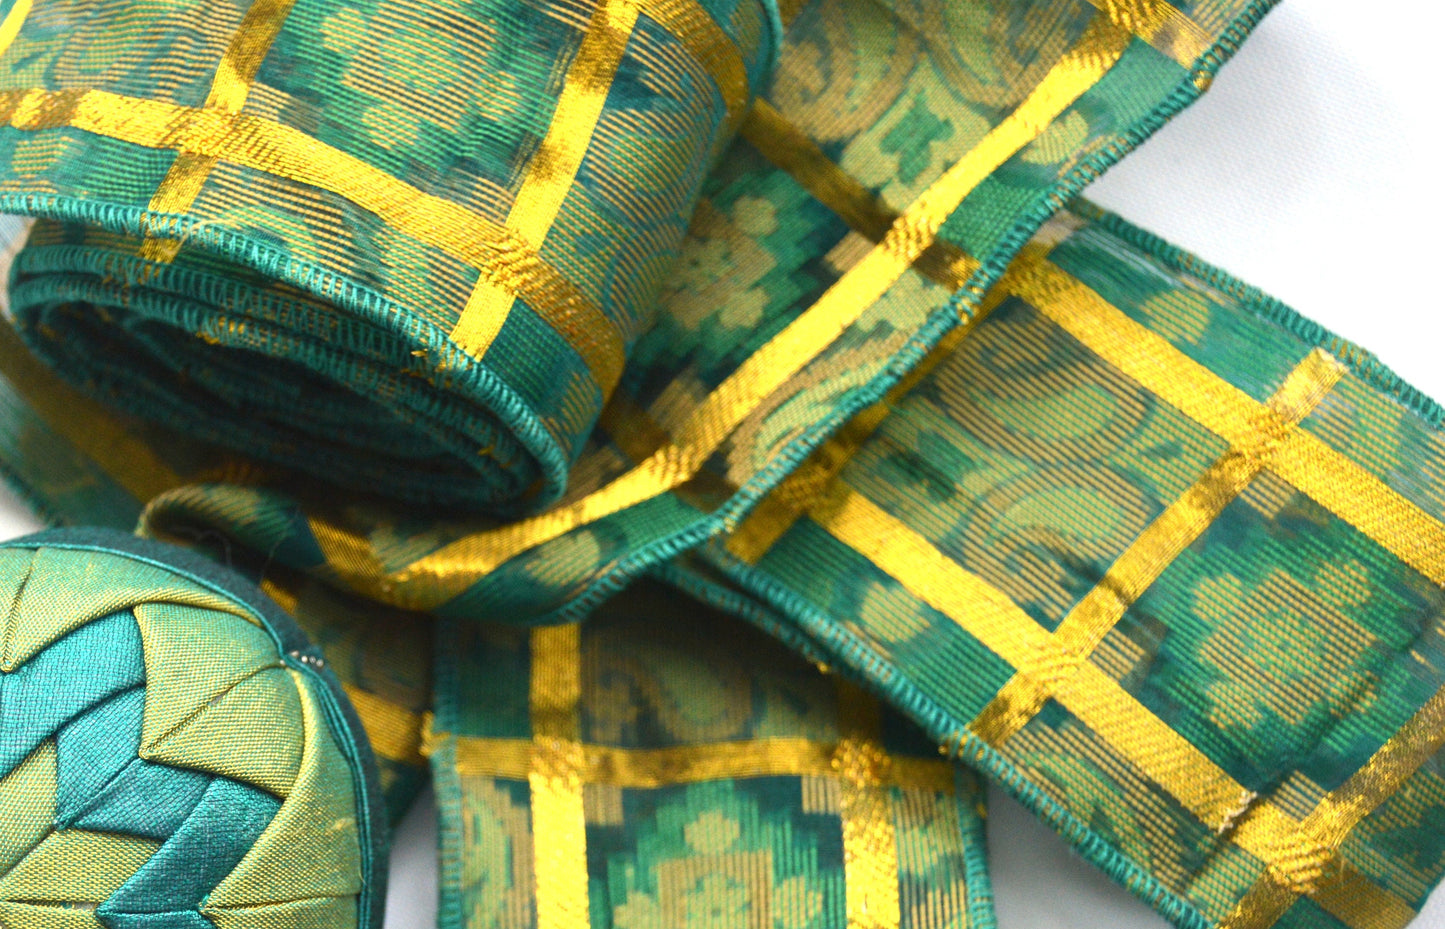 Green & Gold Recycled Upcycled Vintage Sari Silk Ribbon - Bows Gift Wrap Decoration